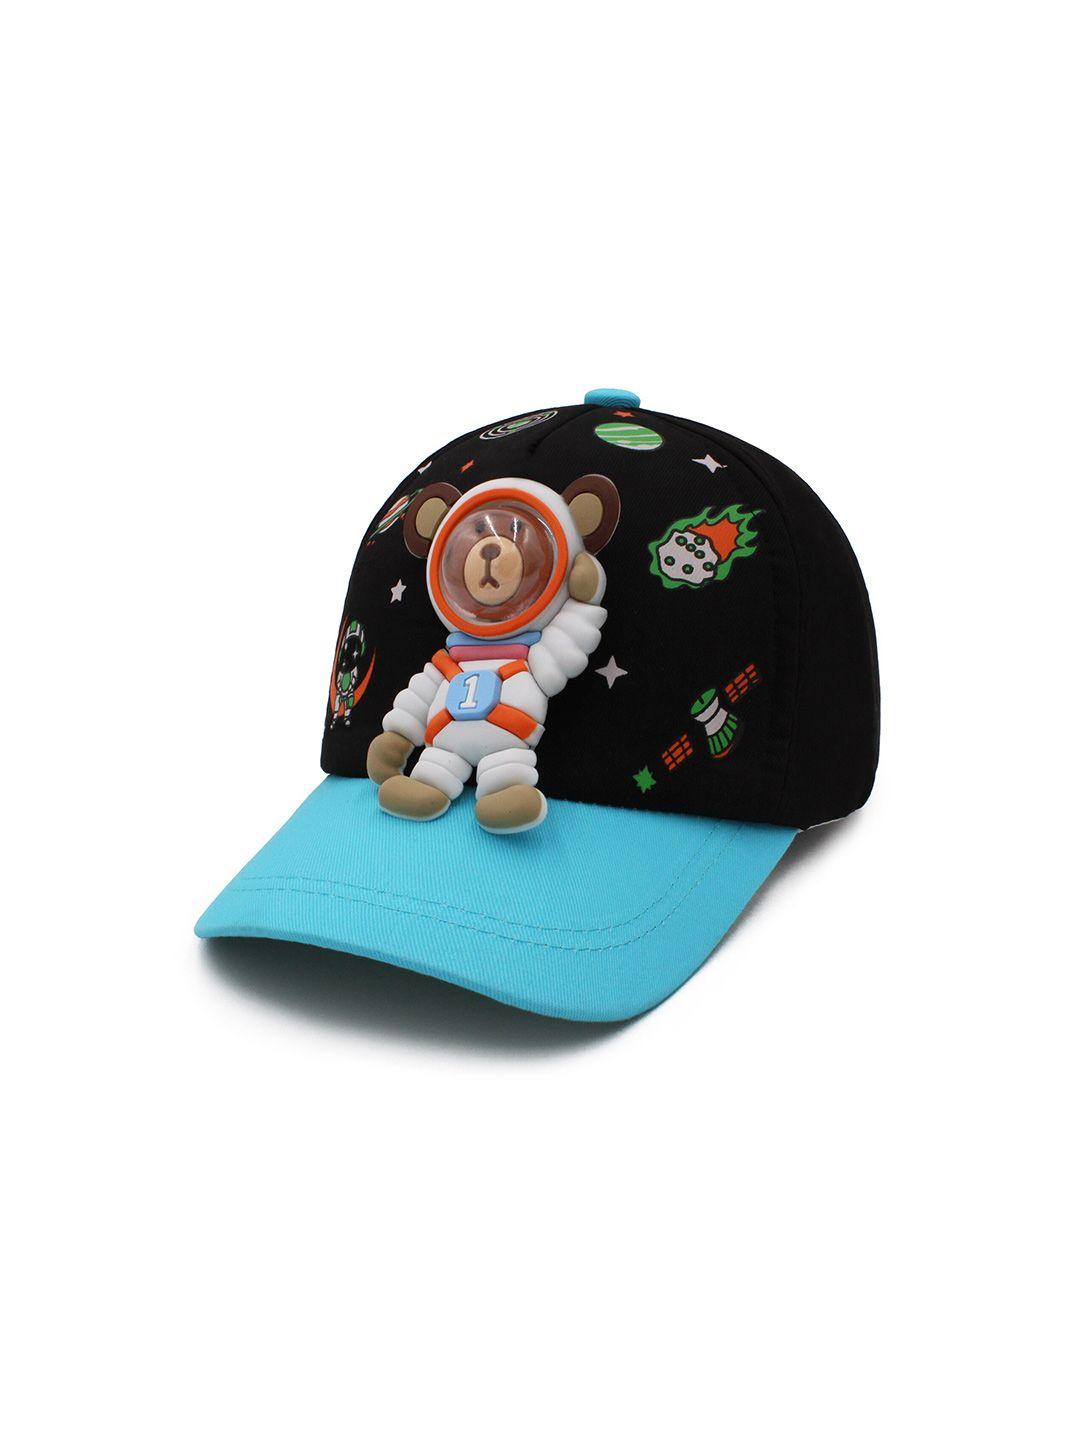 jenna kids cartoon character printed cotton baseball cap